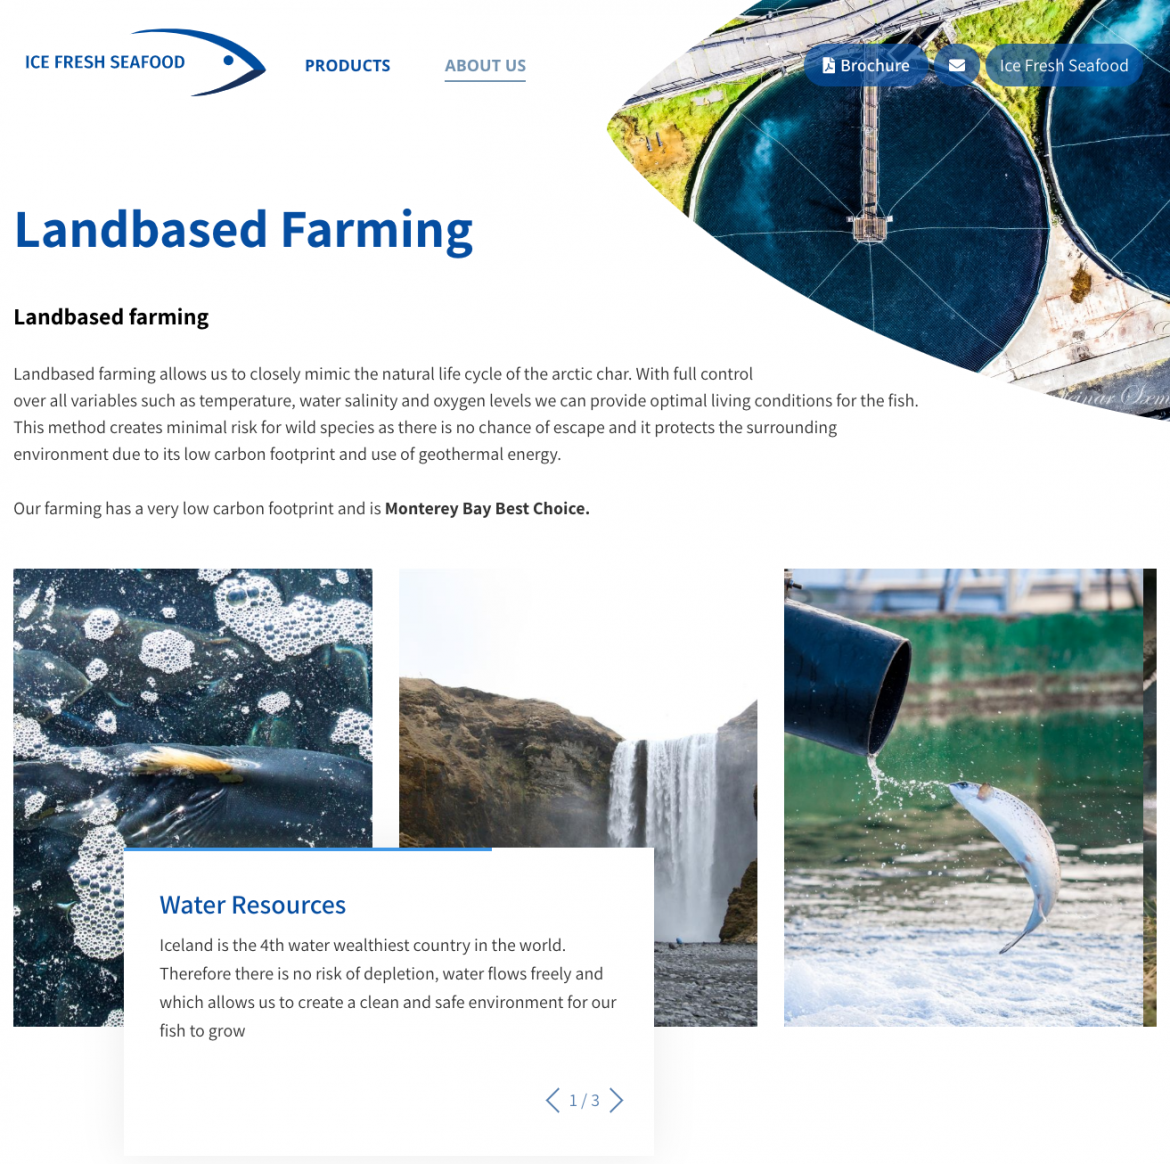 landbased-farming-ice-fresh-seafood-wwwicefreshis.png